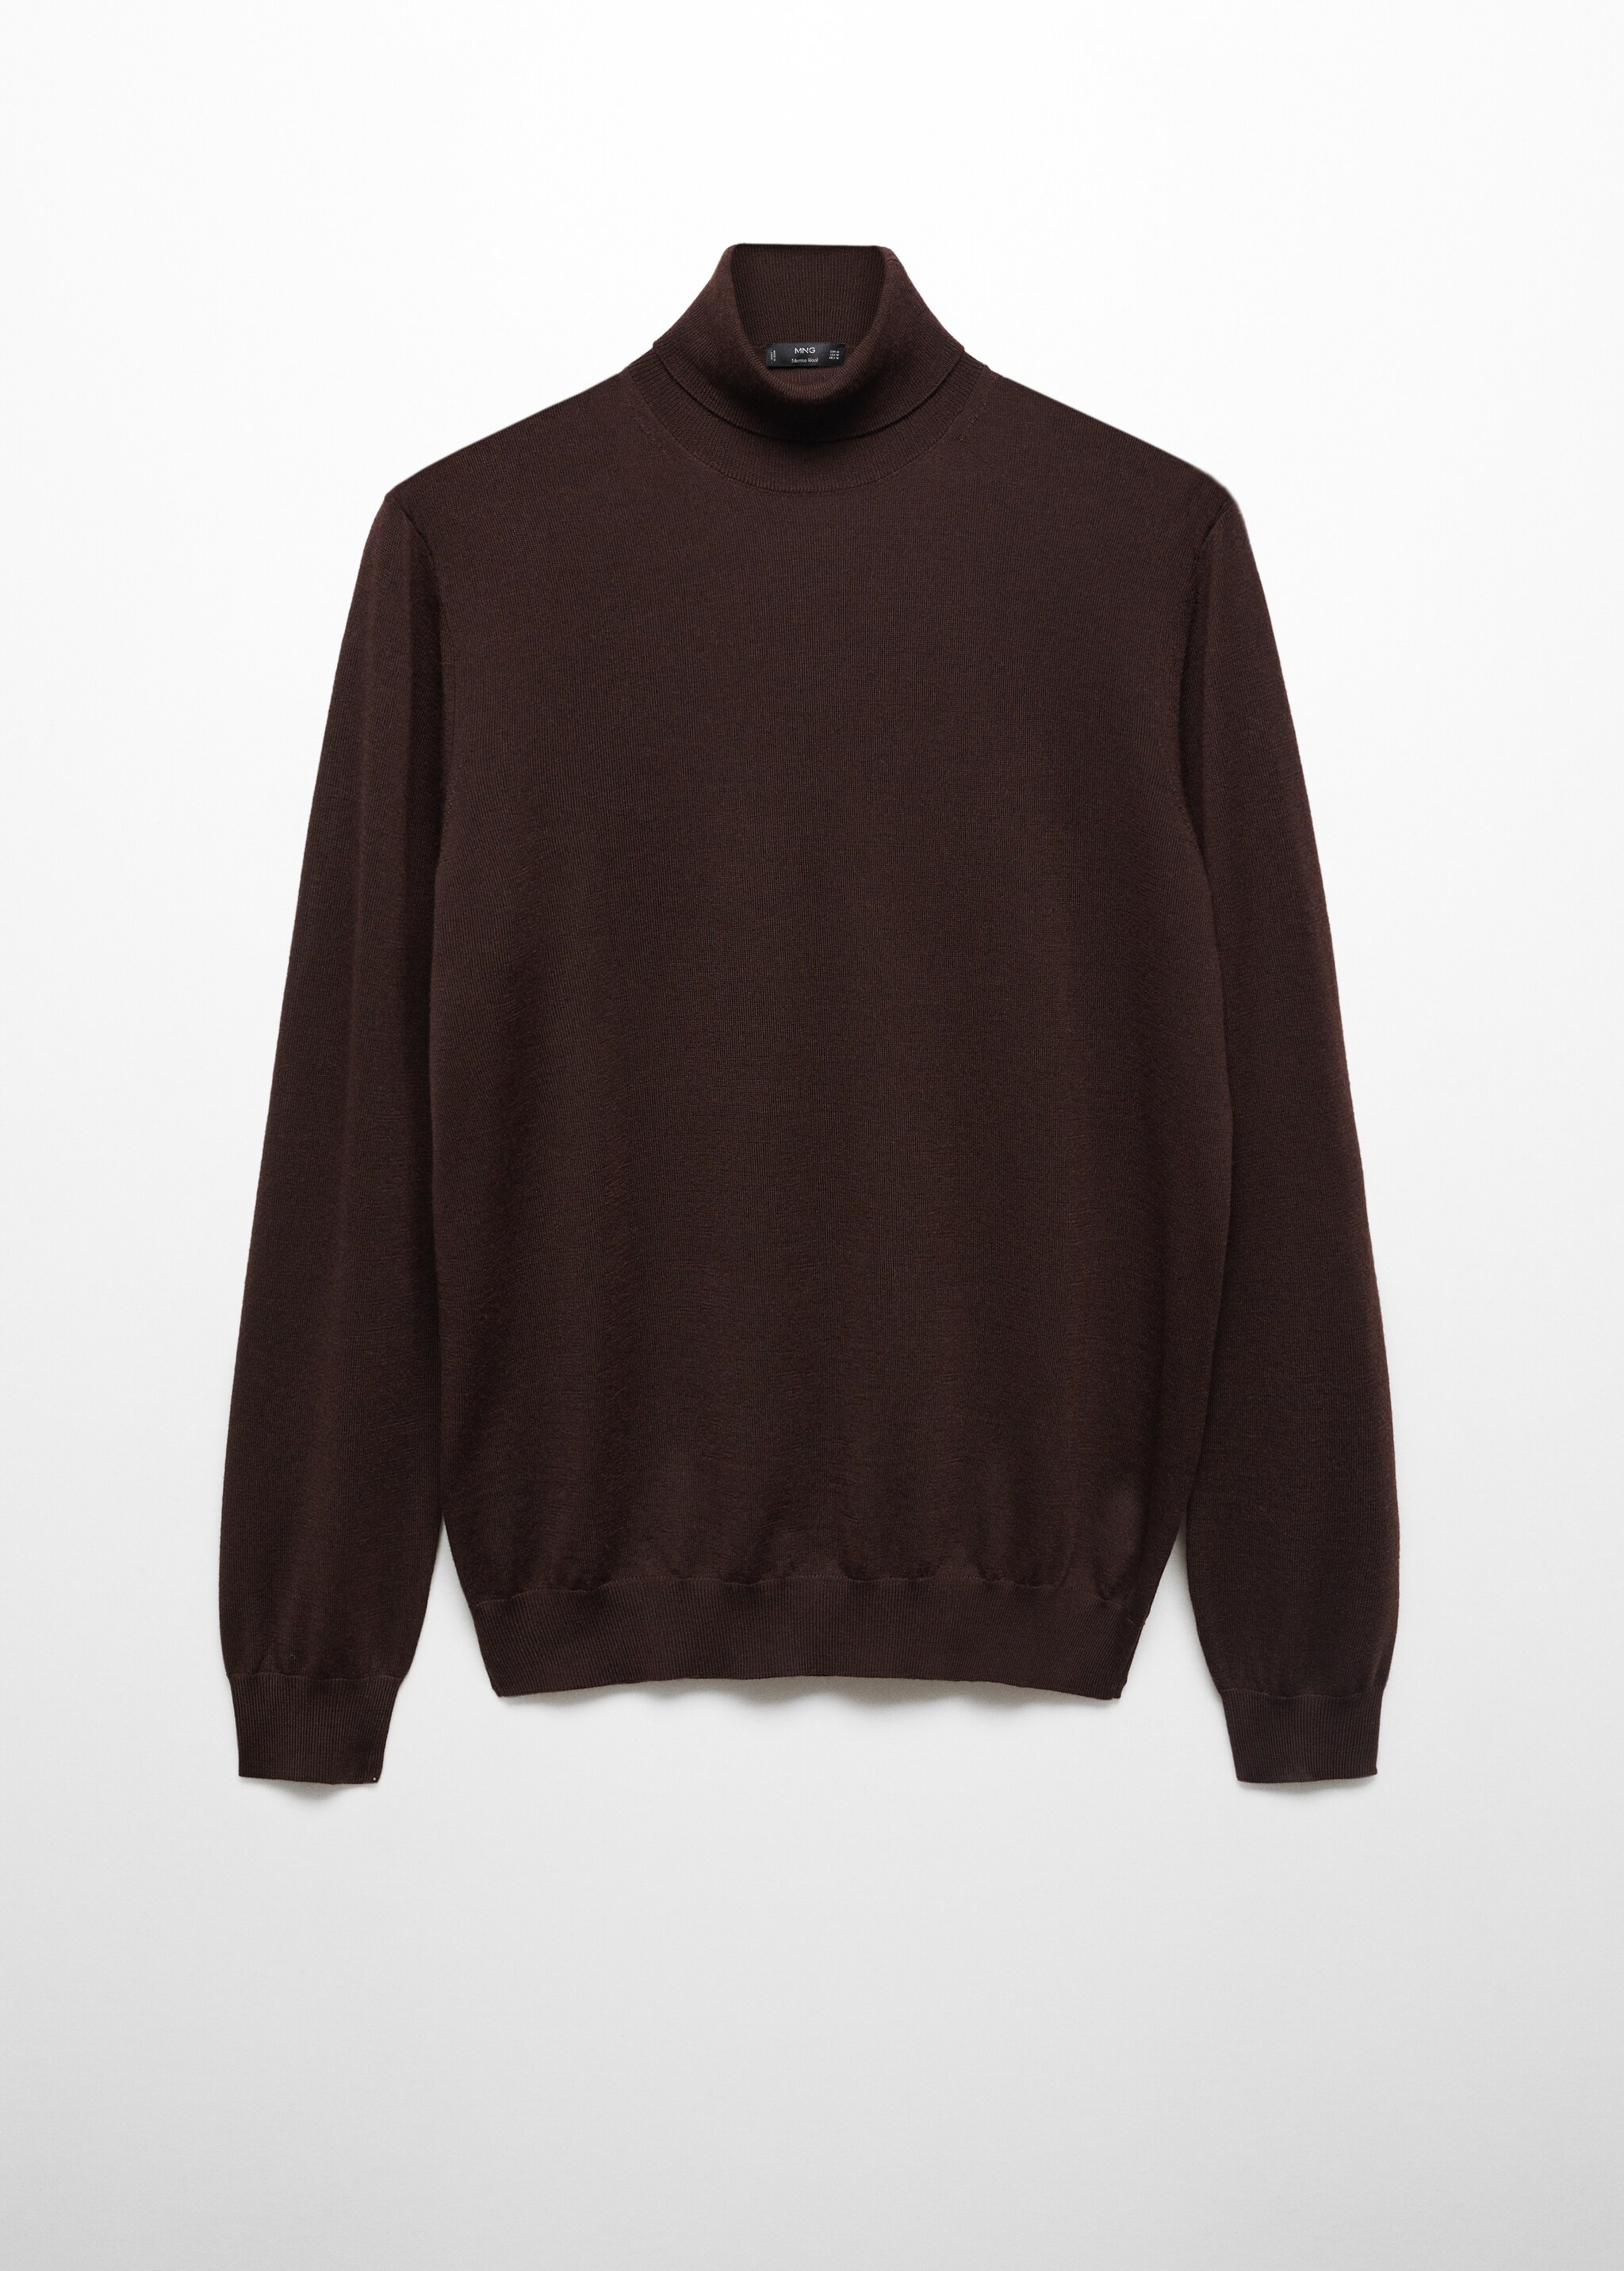 100% merino wool turtleneck sweater - Article without model